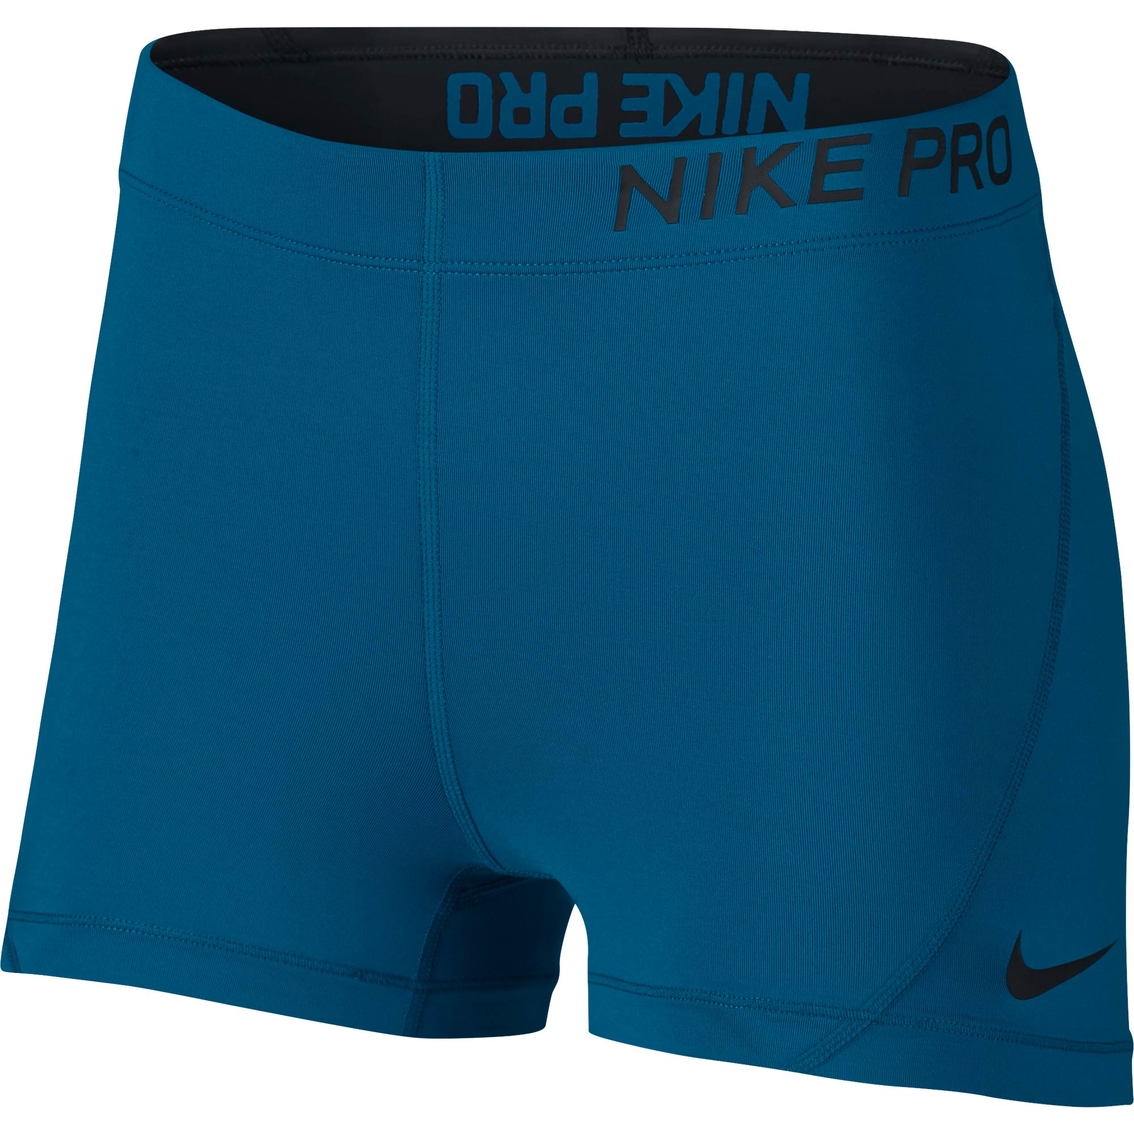 Nike Pro Shorts, Shorts, Clothing & Accessories